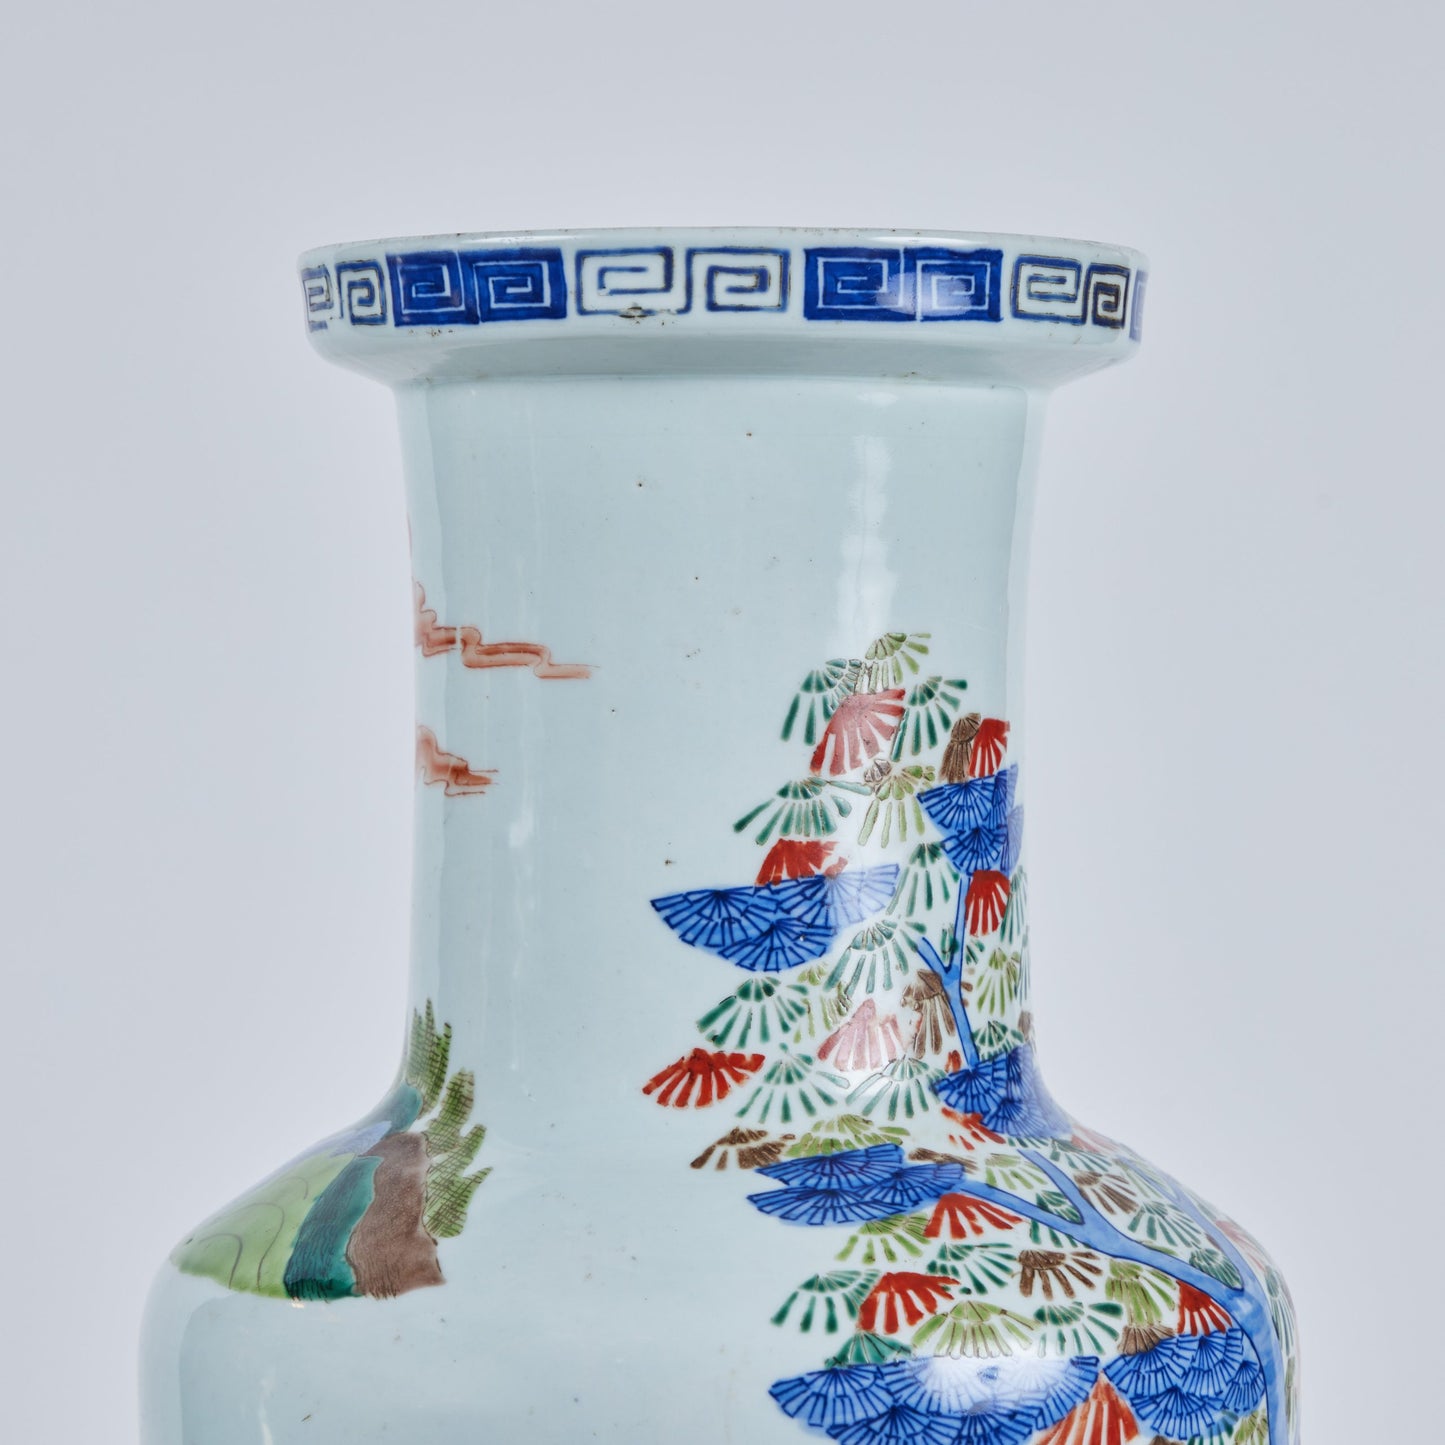 Pair of Porcelain Warrior Vases